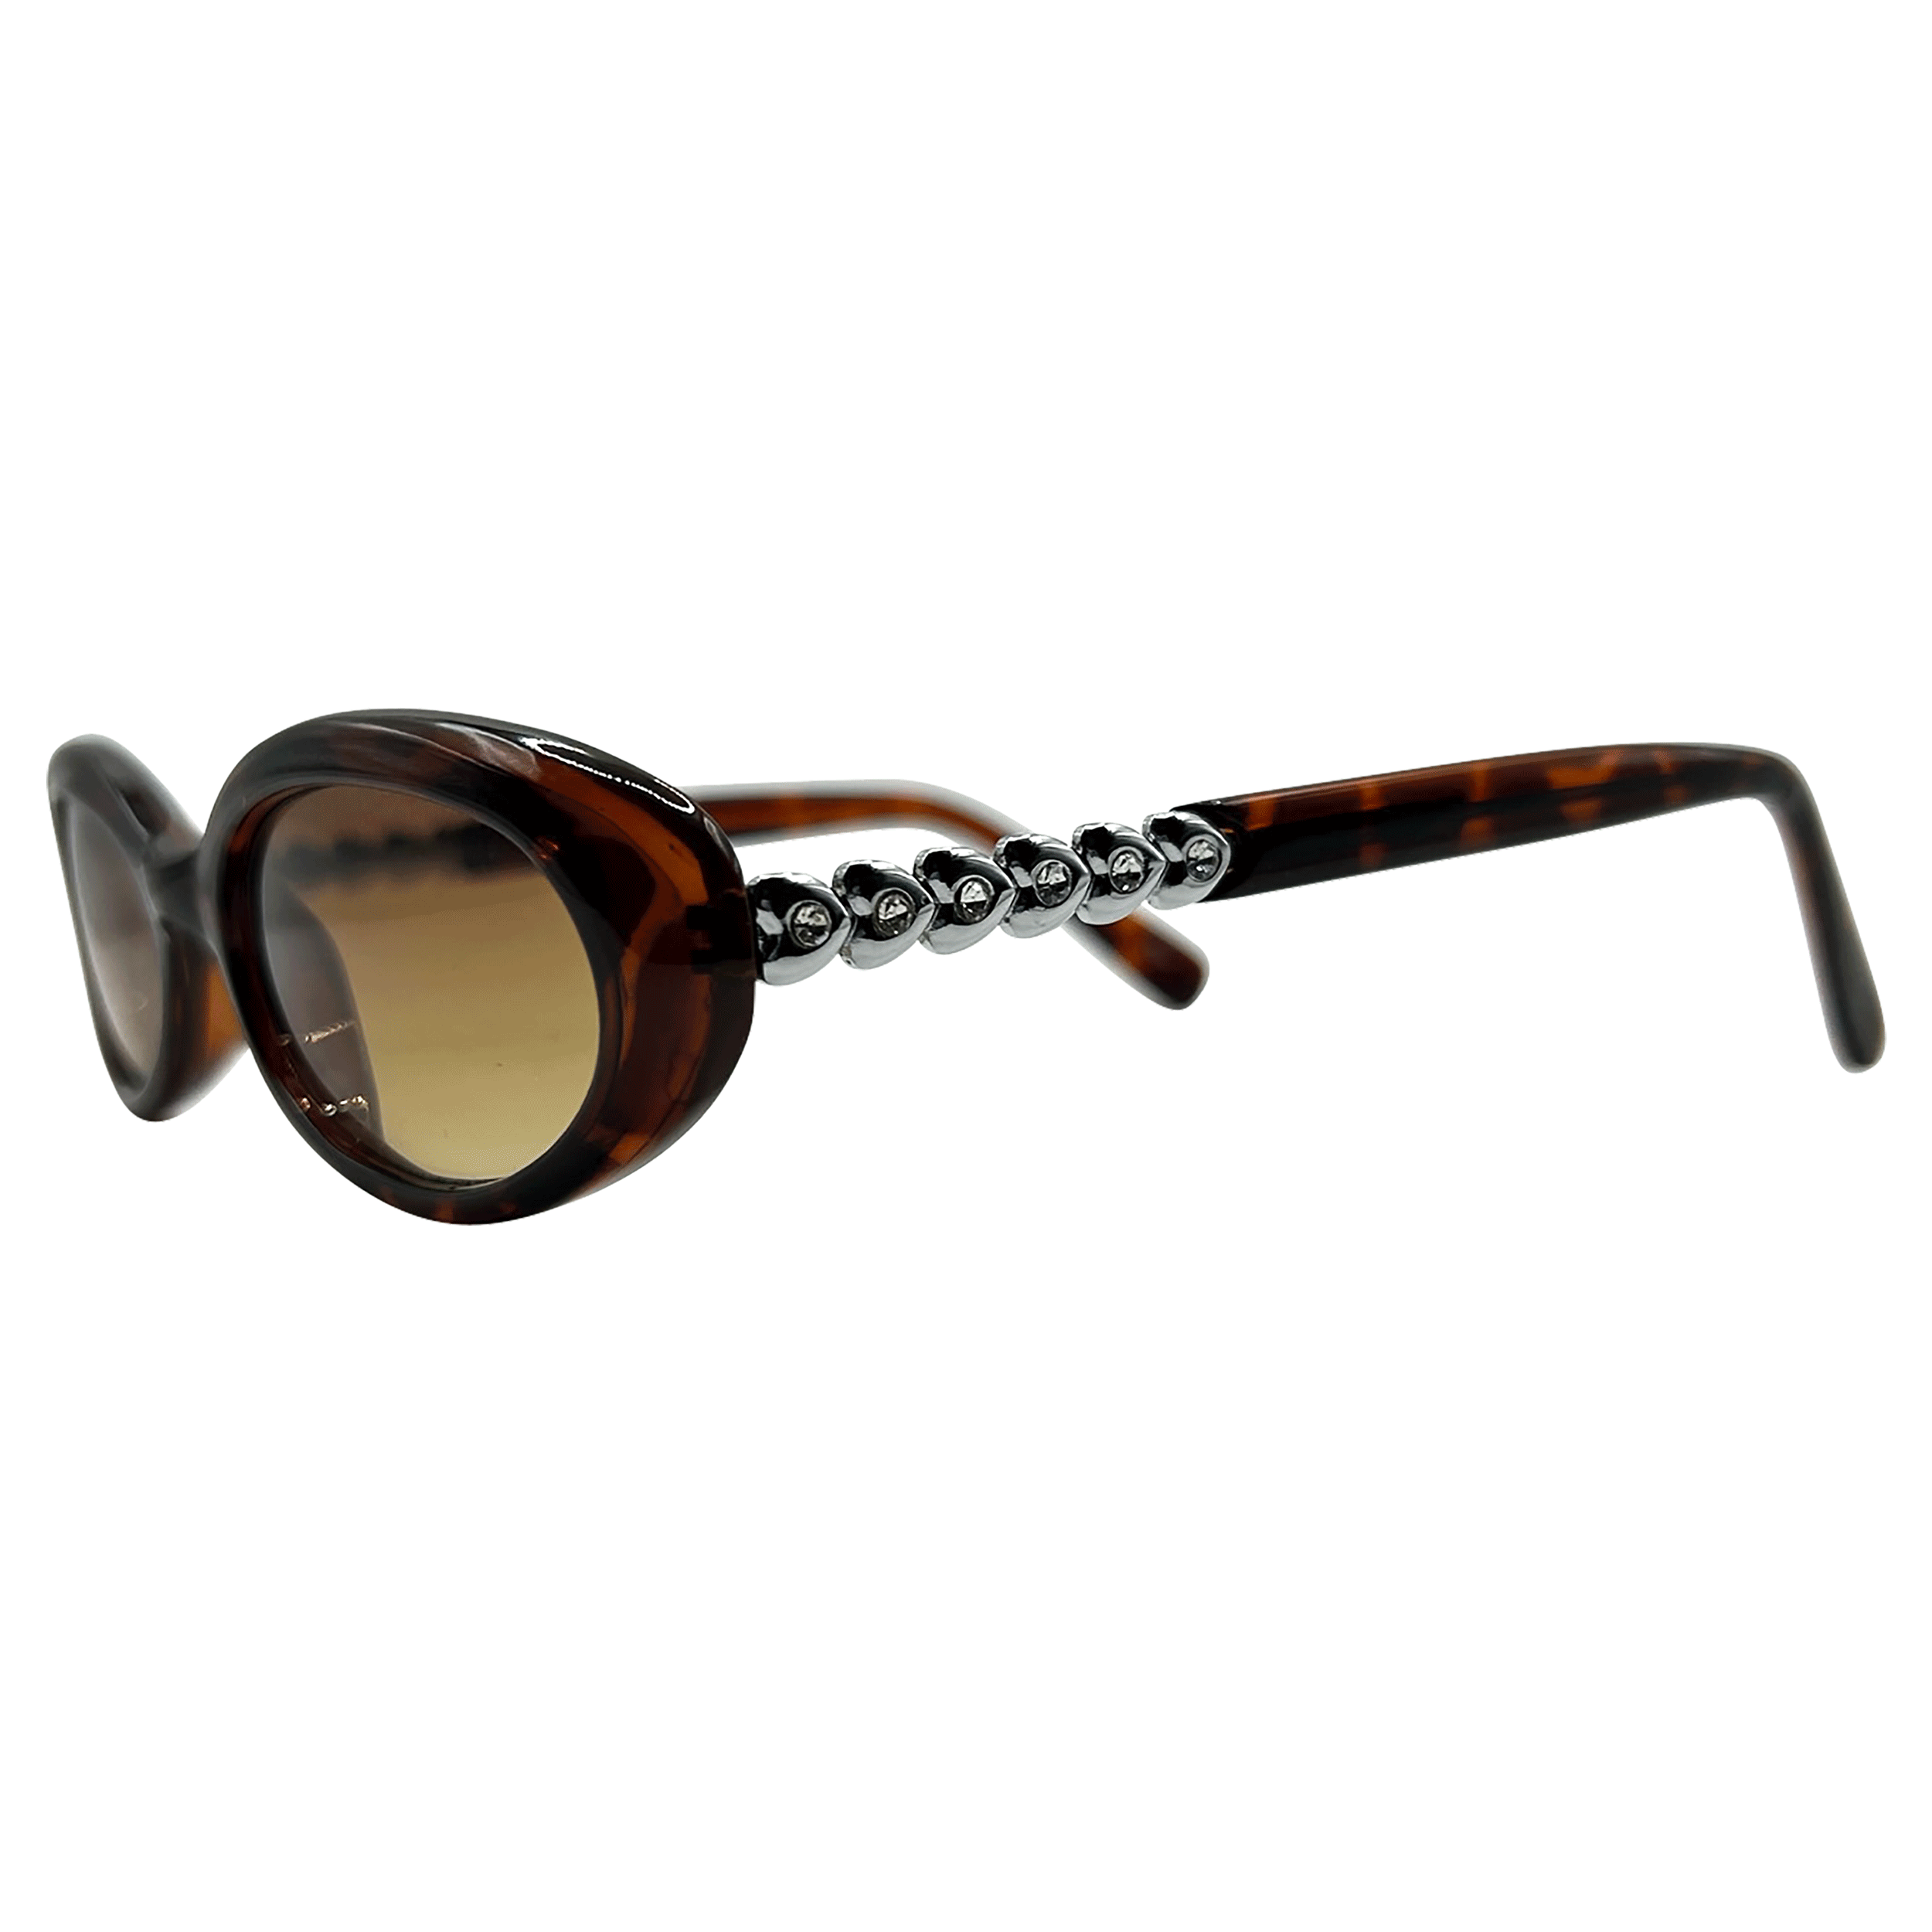 BRIT BRIT Oval Sunglasses